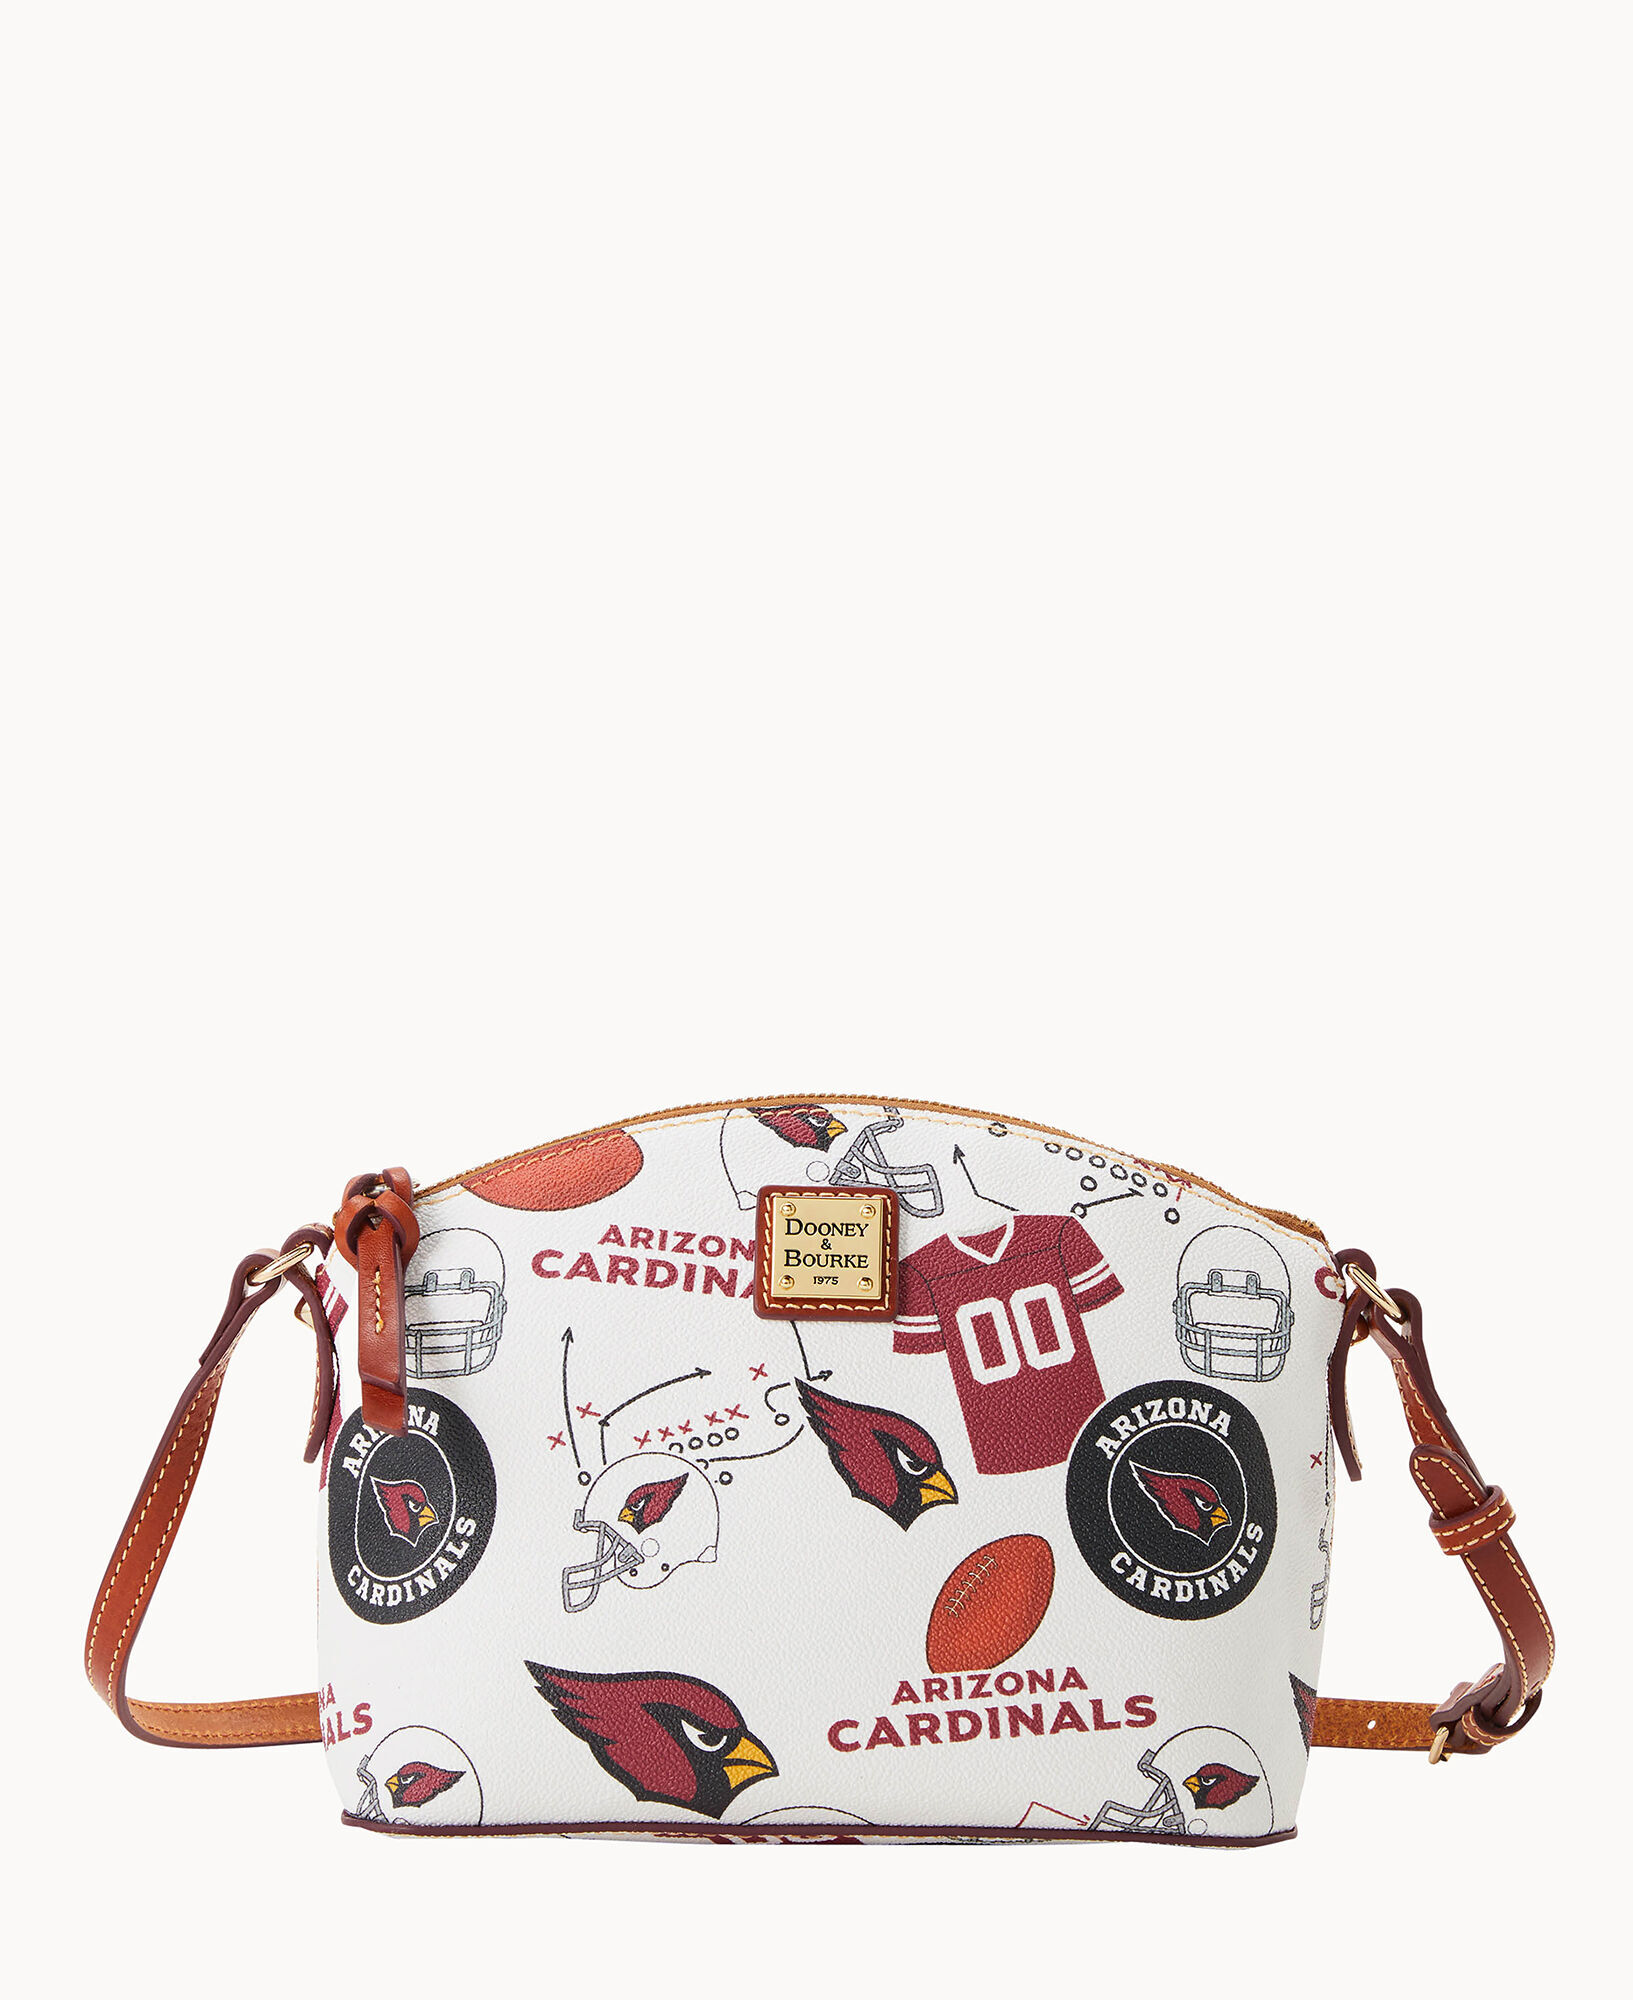 Dooney & Bourke Arizona Cardinals Suki Crossbody Shoulder Bag